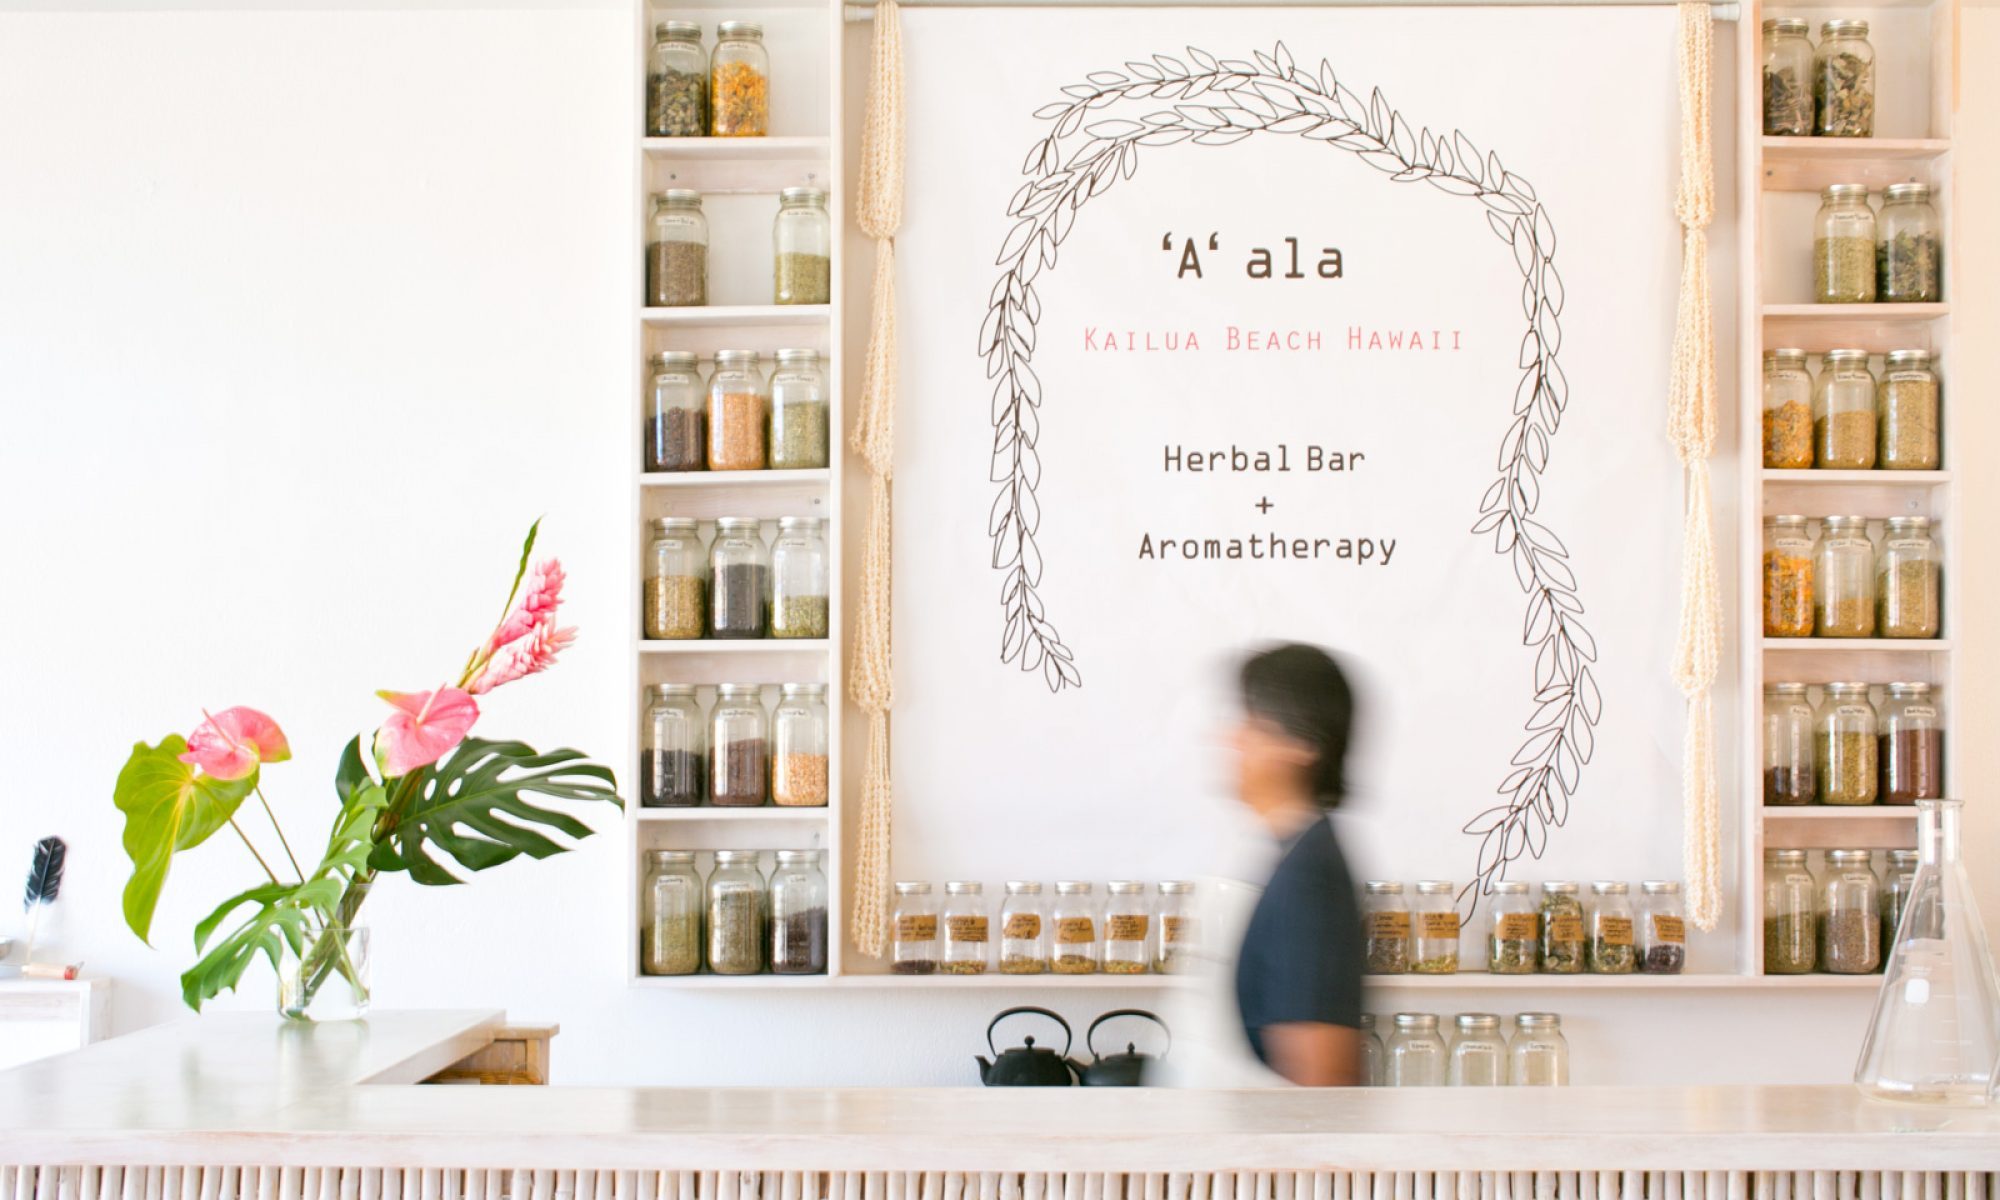 ’A’ ala Herbal Bar + Aromatherapy